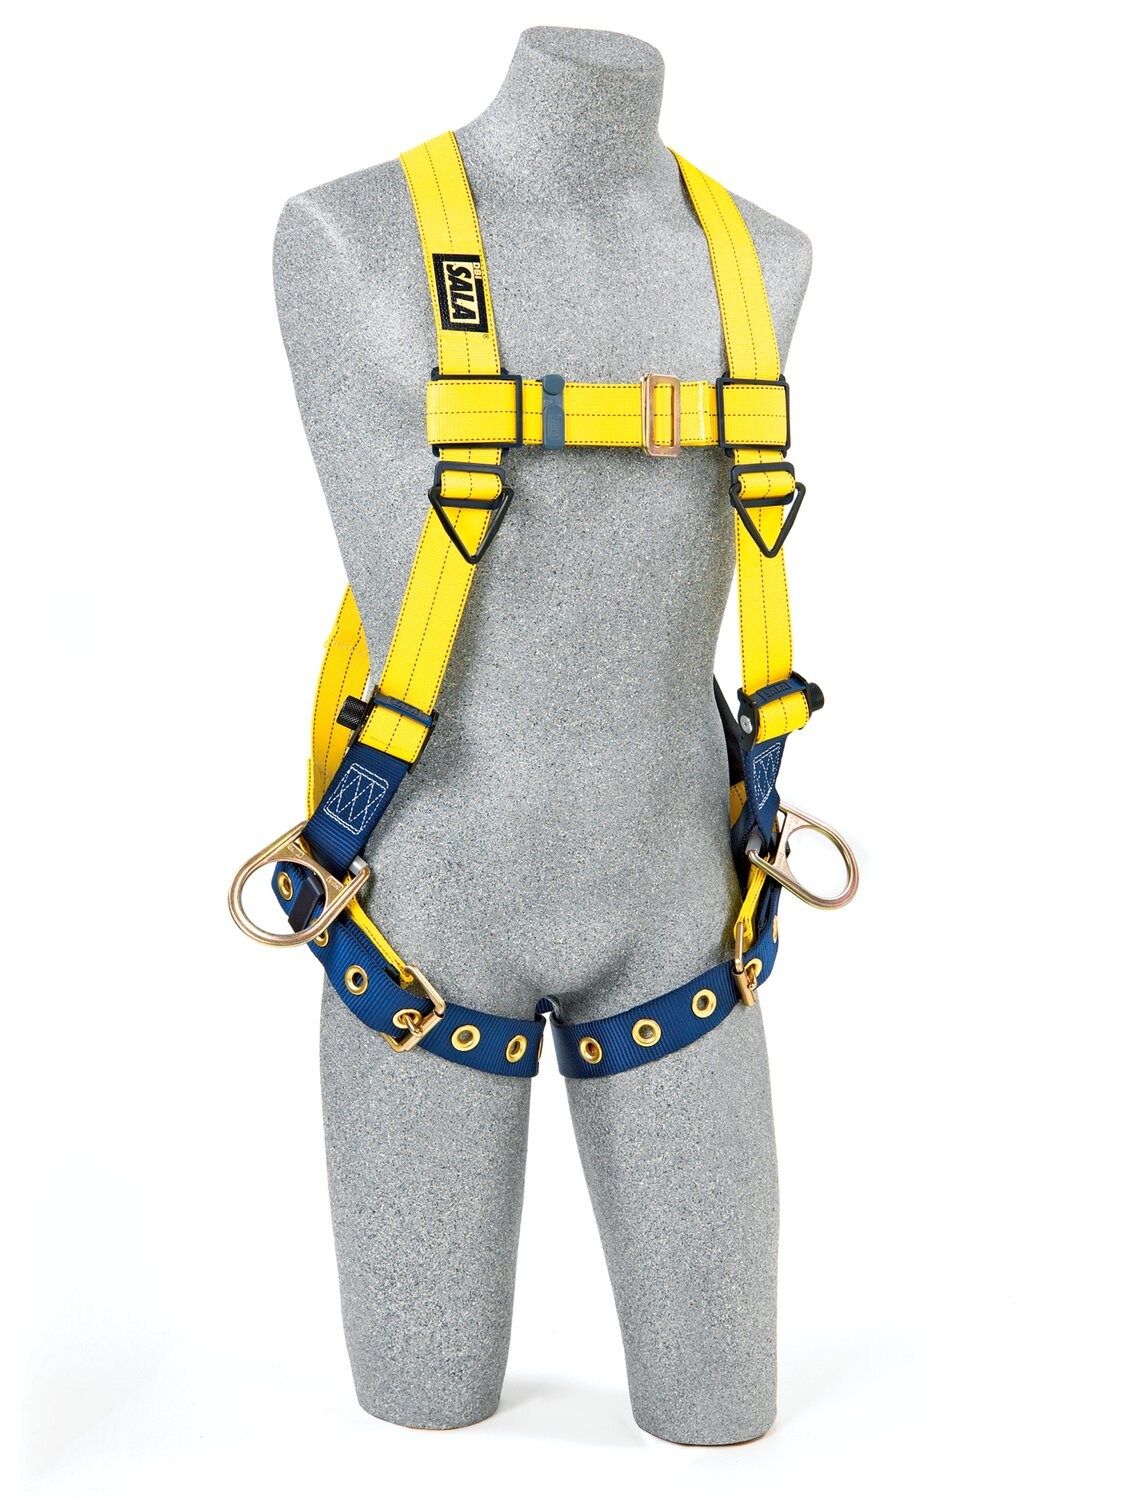 7012691234 - 3M DBI-SALA Delta Vest Positioning Safety Harness 1104875, X-Large